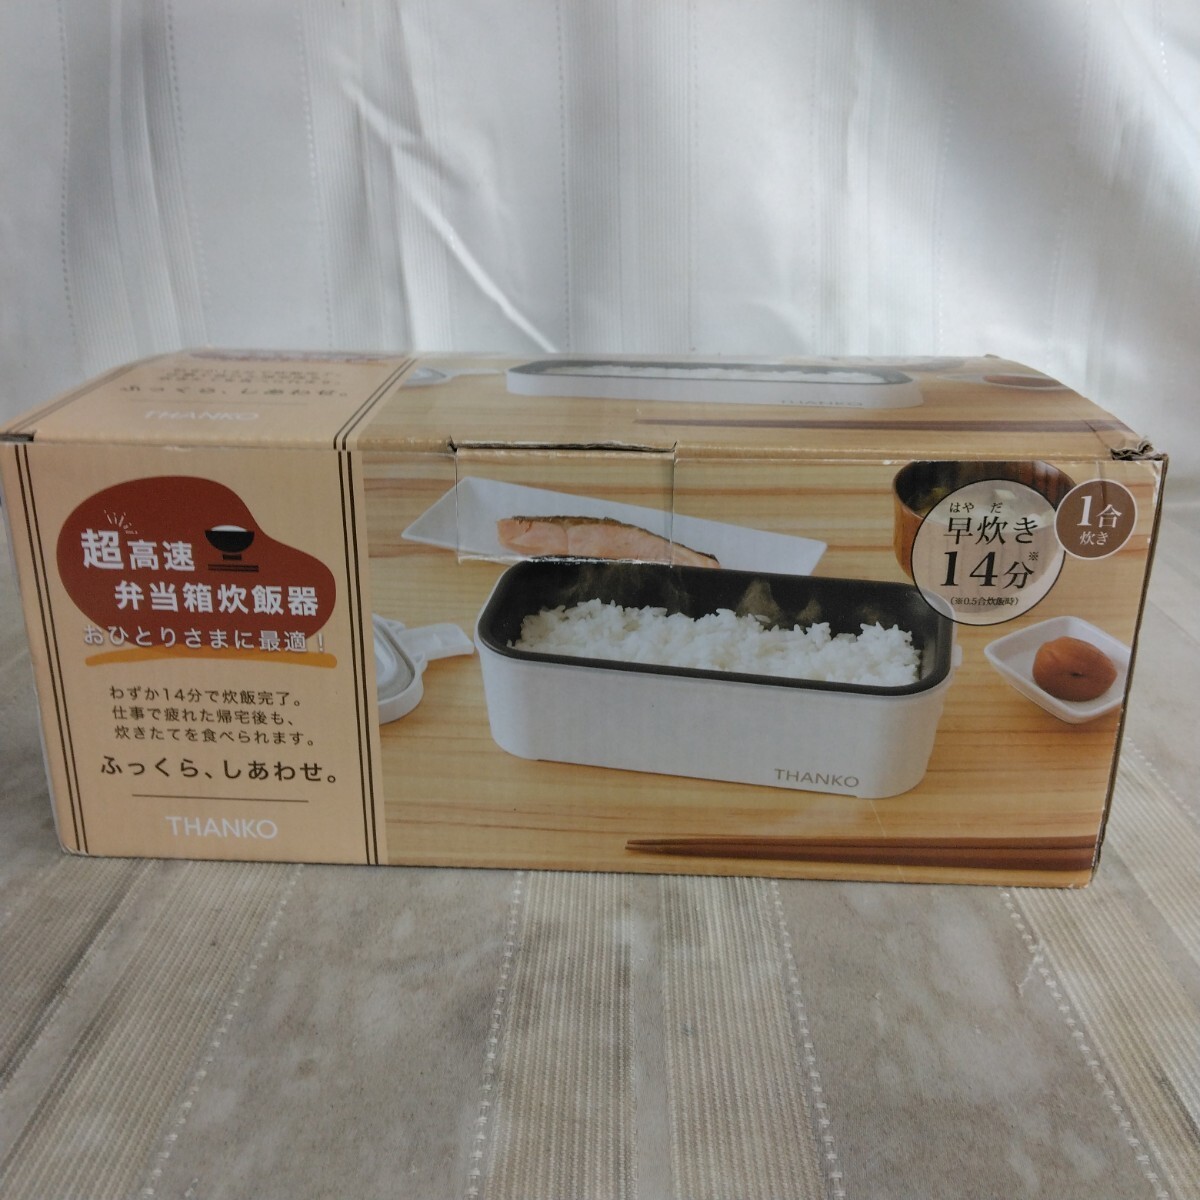  beautiful goods [ sun ko- corporation ]TKFCLBRC...... optimum super high speed lunch box rice cooker THANKO 0.18L 1. outdoor rice cooker 